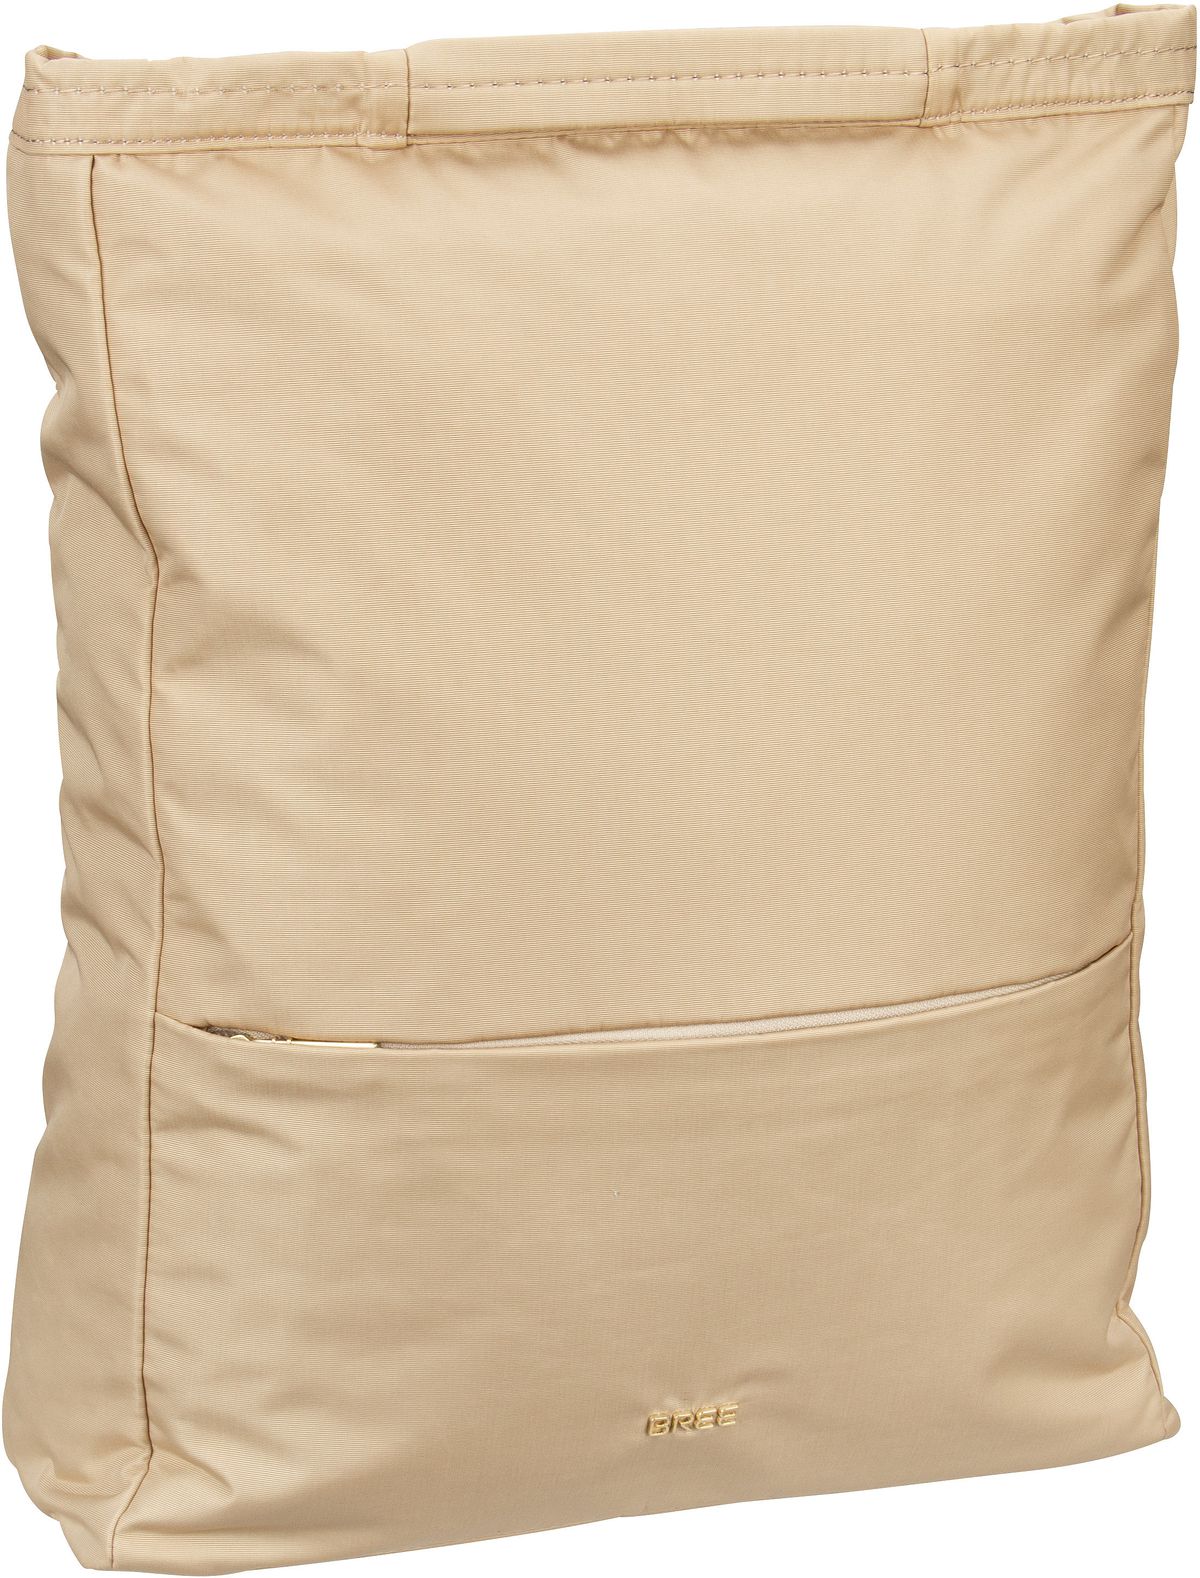 Bree Juna Textile 4  in Toasted Almond (14.4 Liter), Rucksack / Backpack